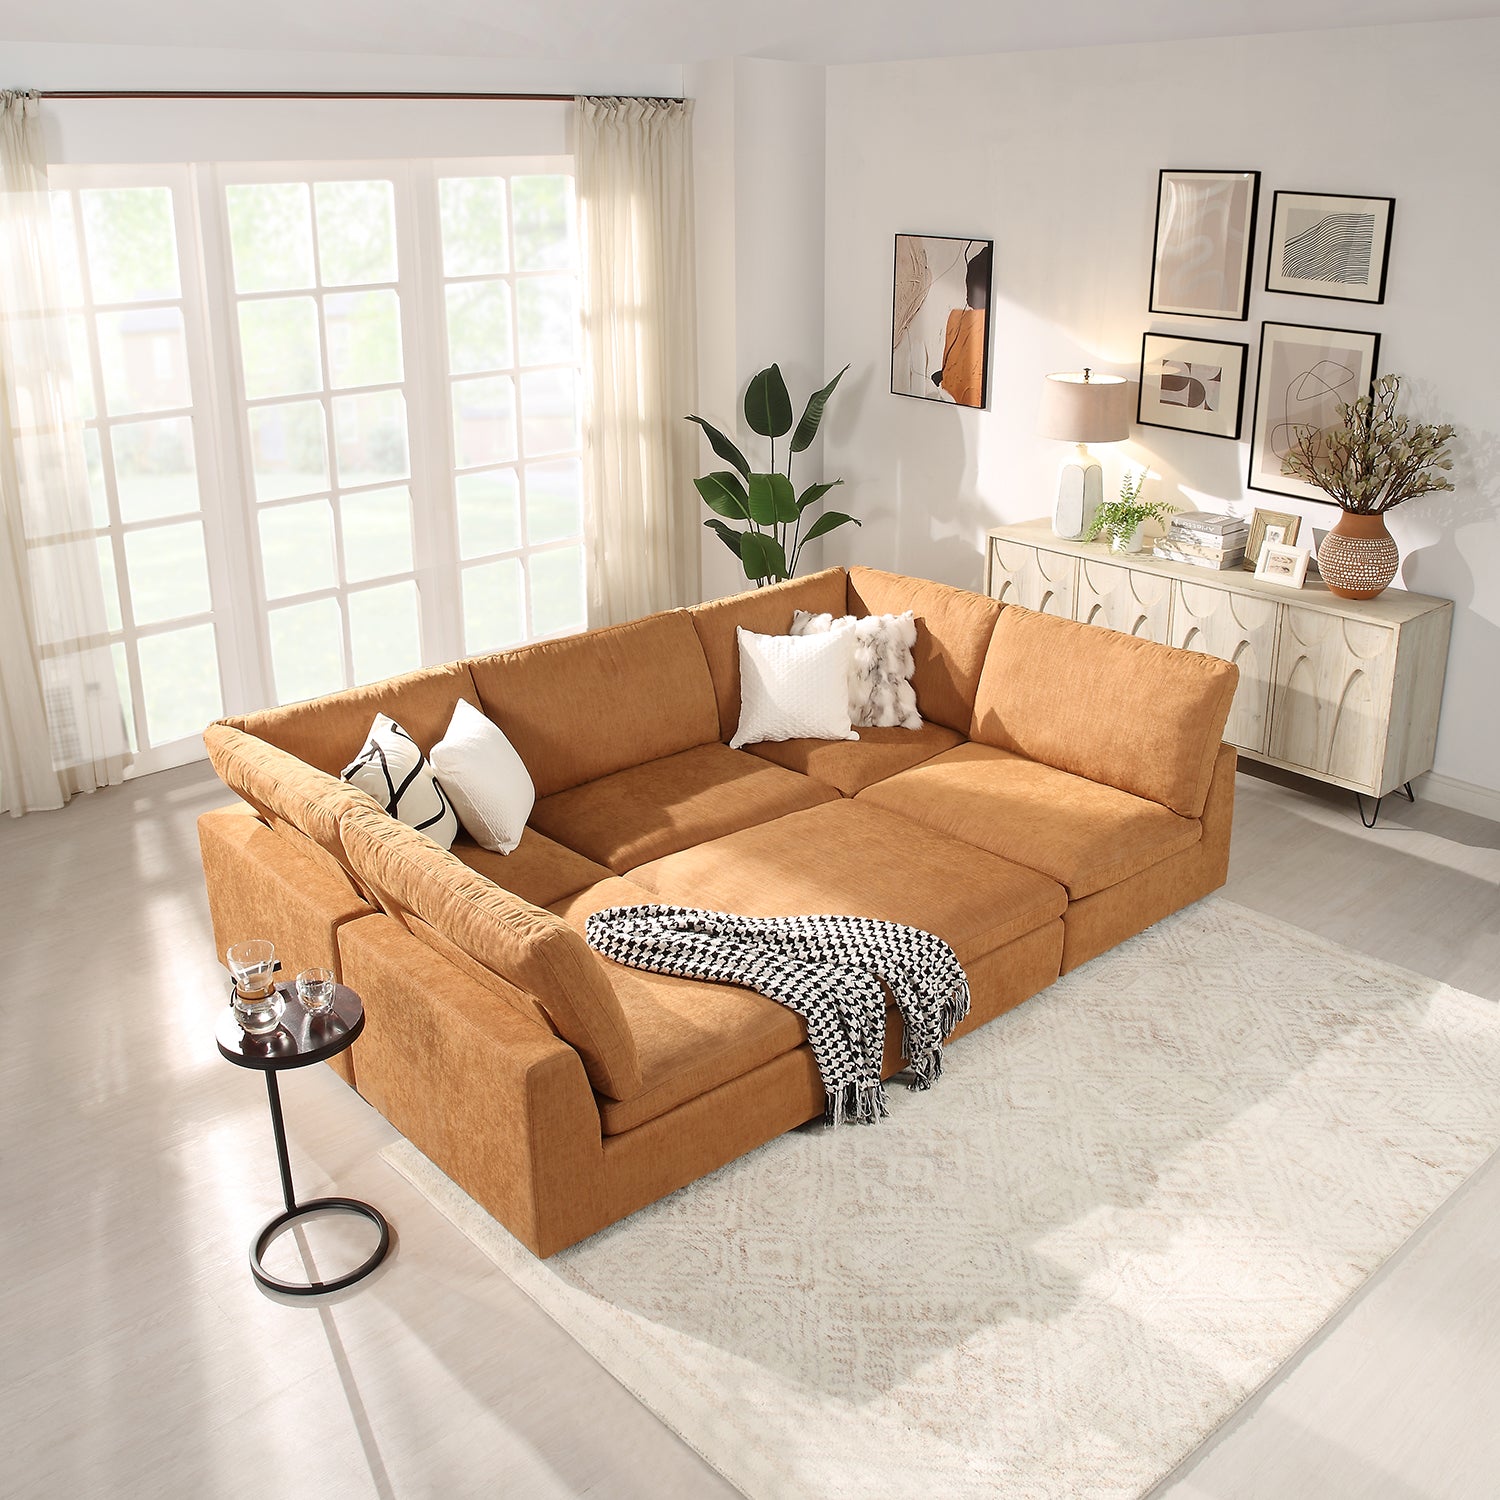 Cloud Tan Linen 3-Seat Sofa